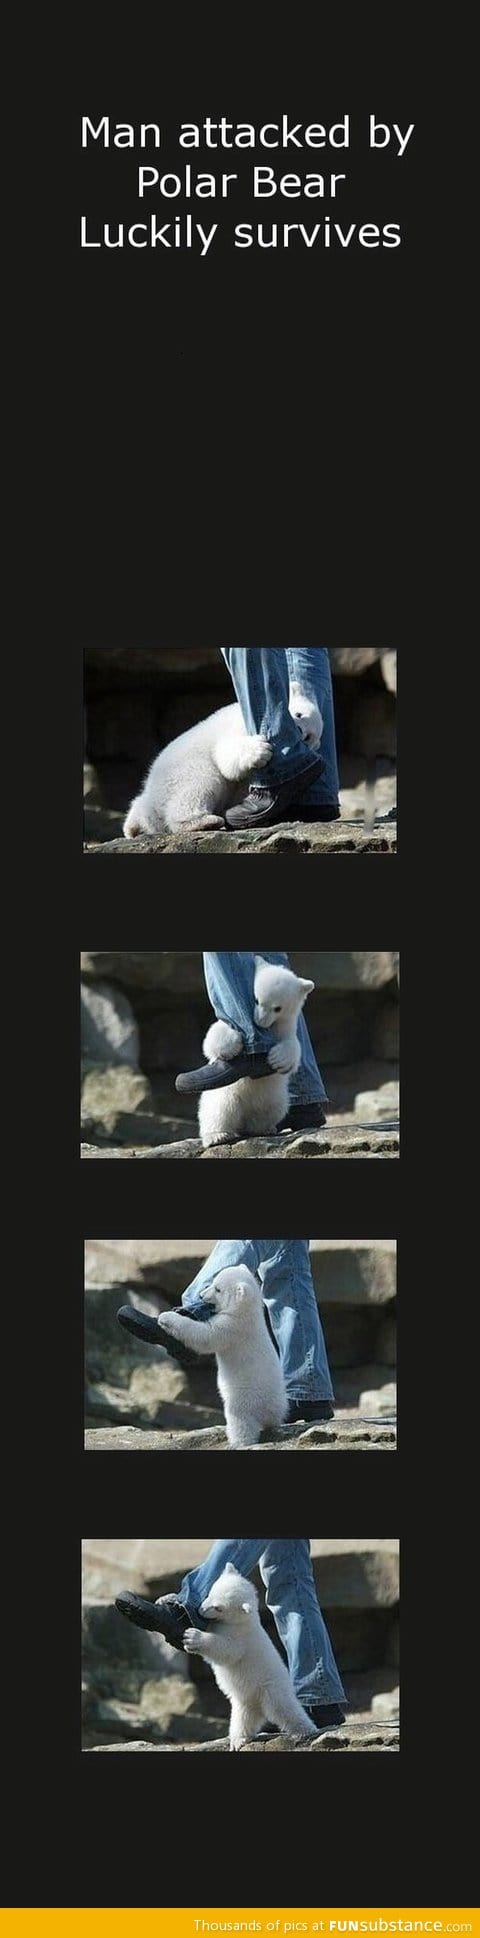 Man attacked by polar bear survives